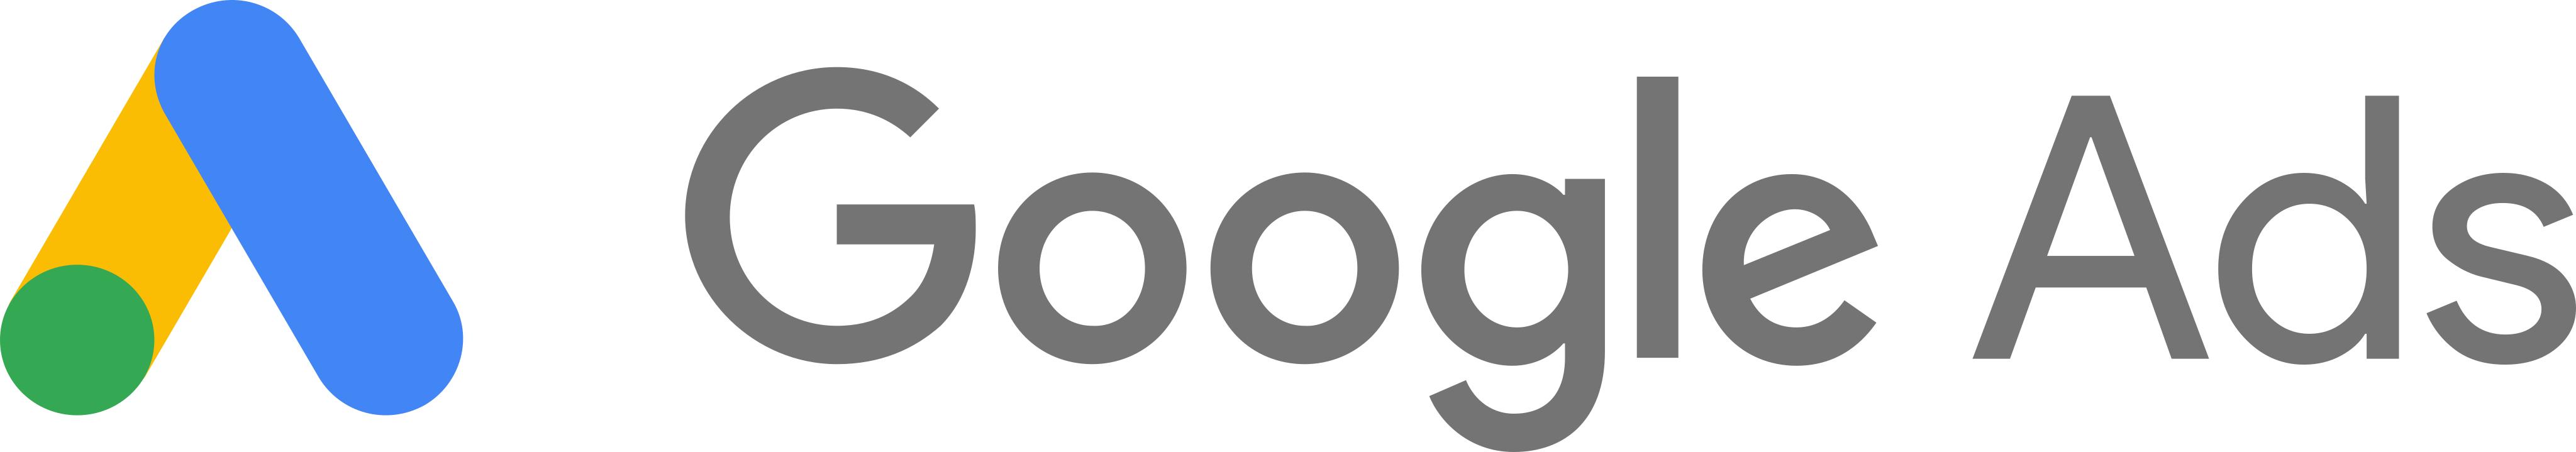 google adwords logo 1